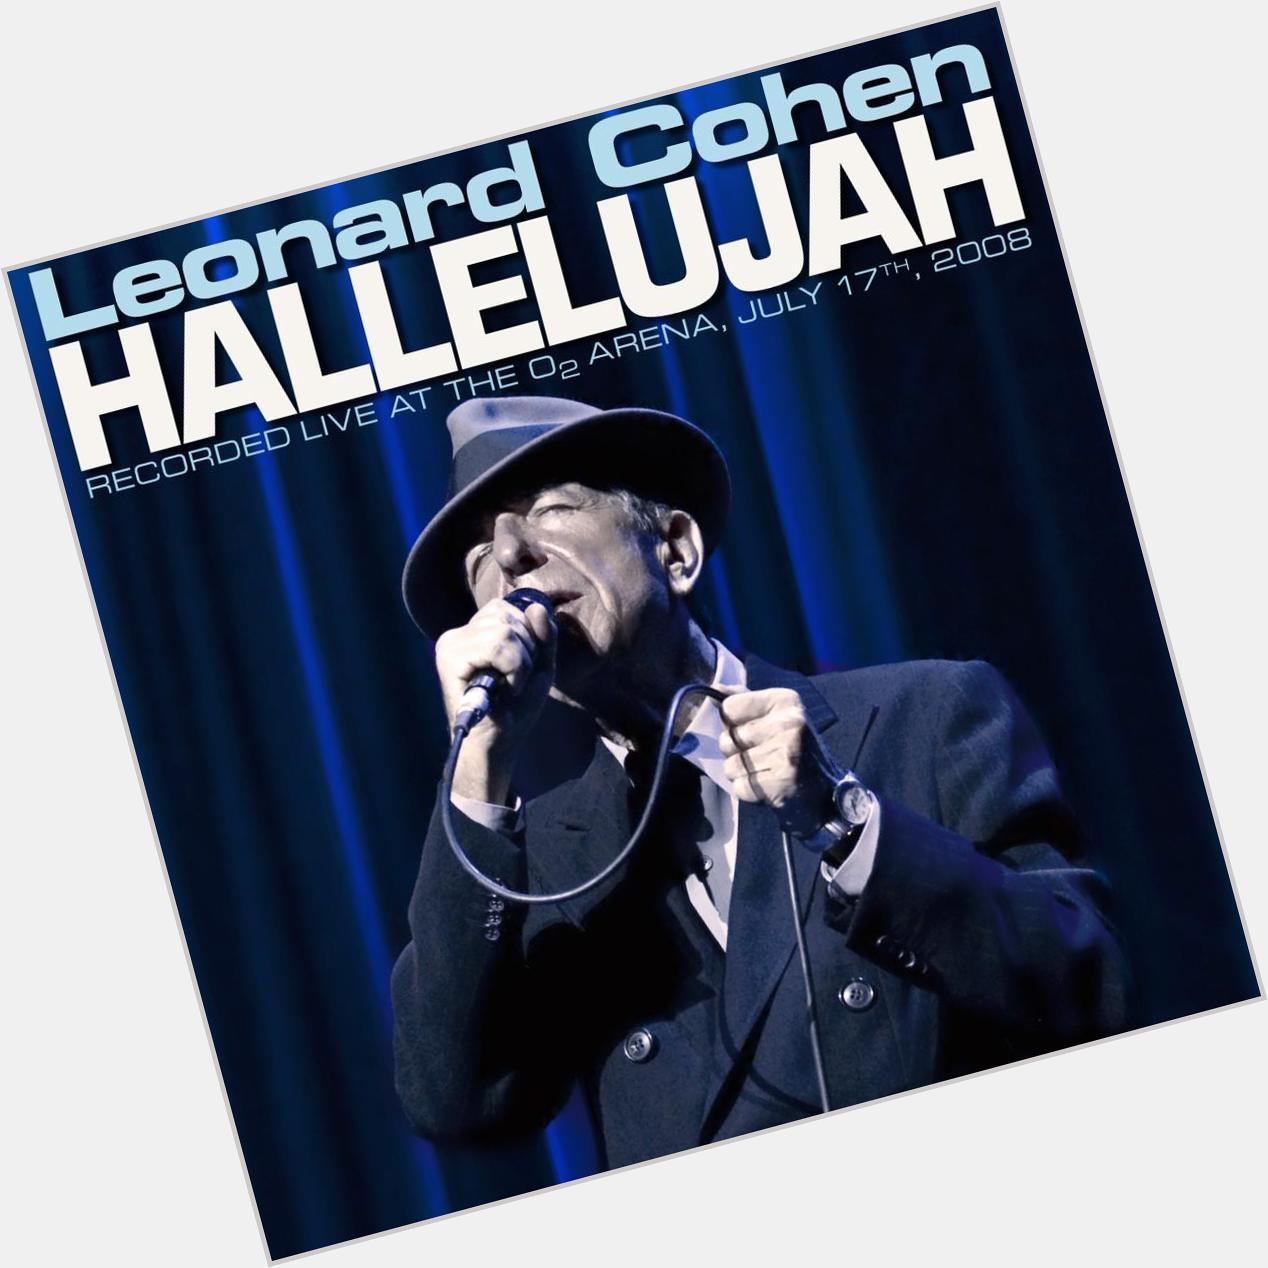  Happy birthday Leonard
Leonard Cohen - Hallelujah
 